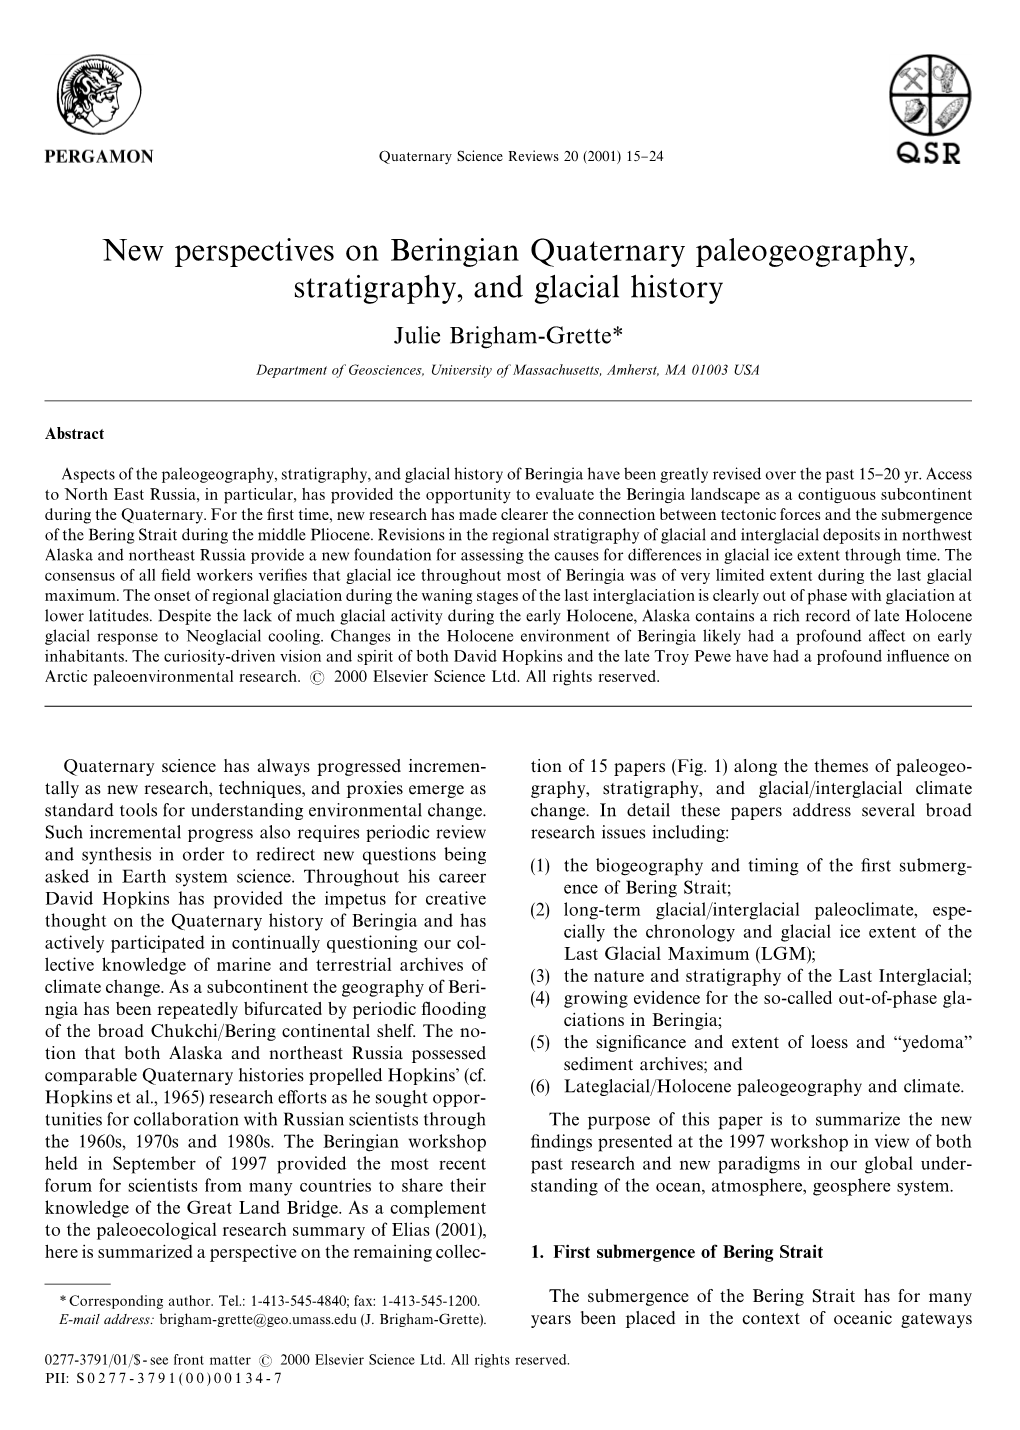 New Perspectives on Beringian Quaternary Paleogeography